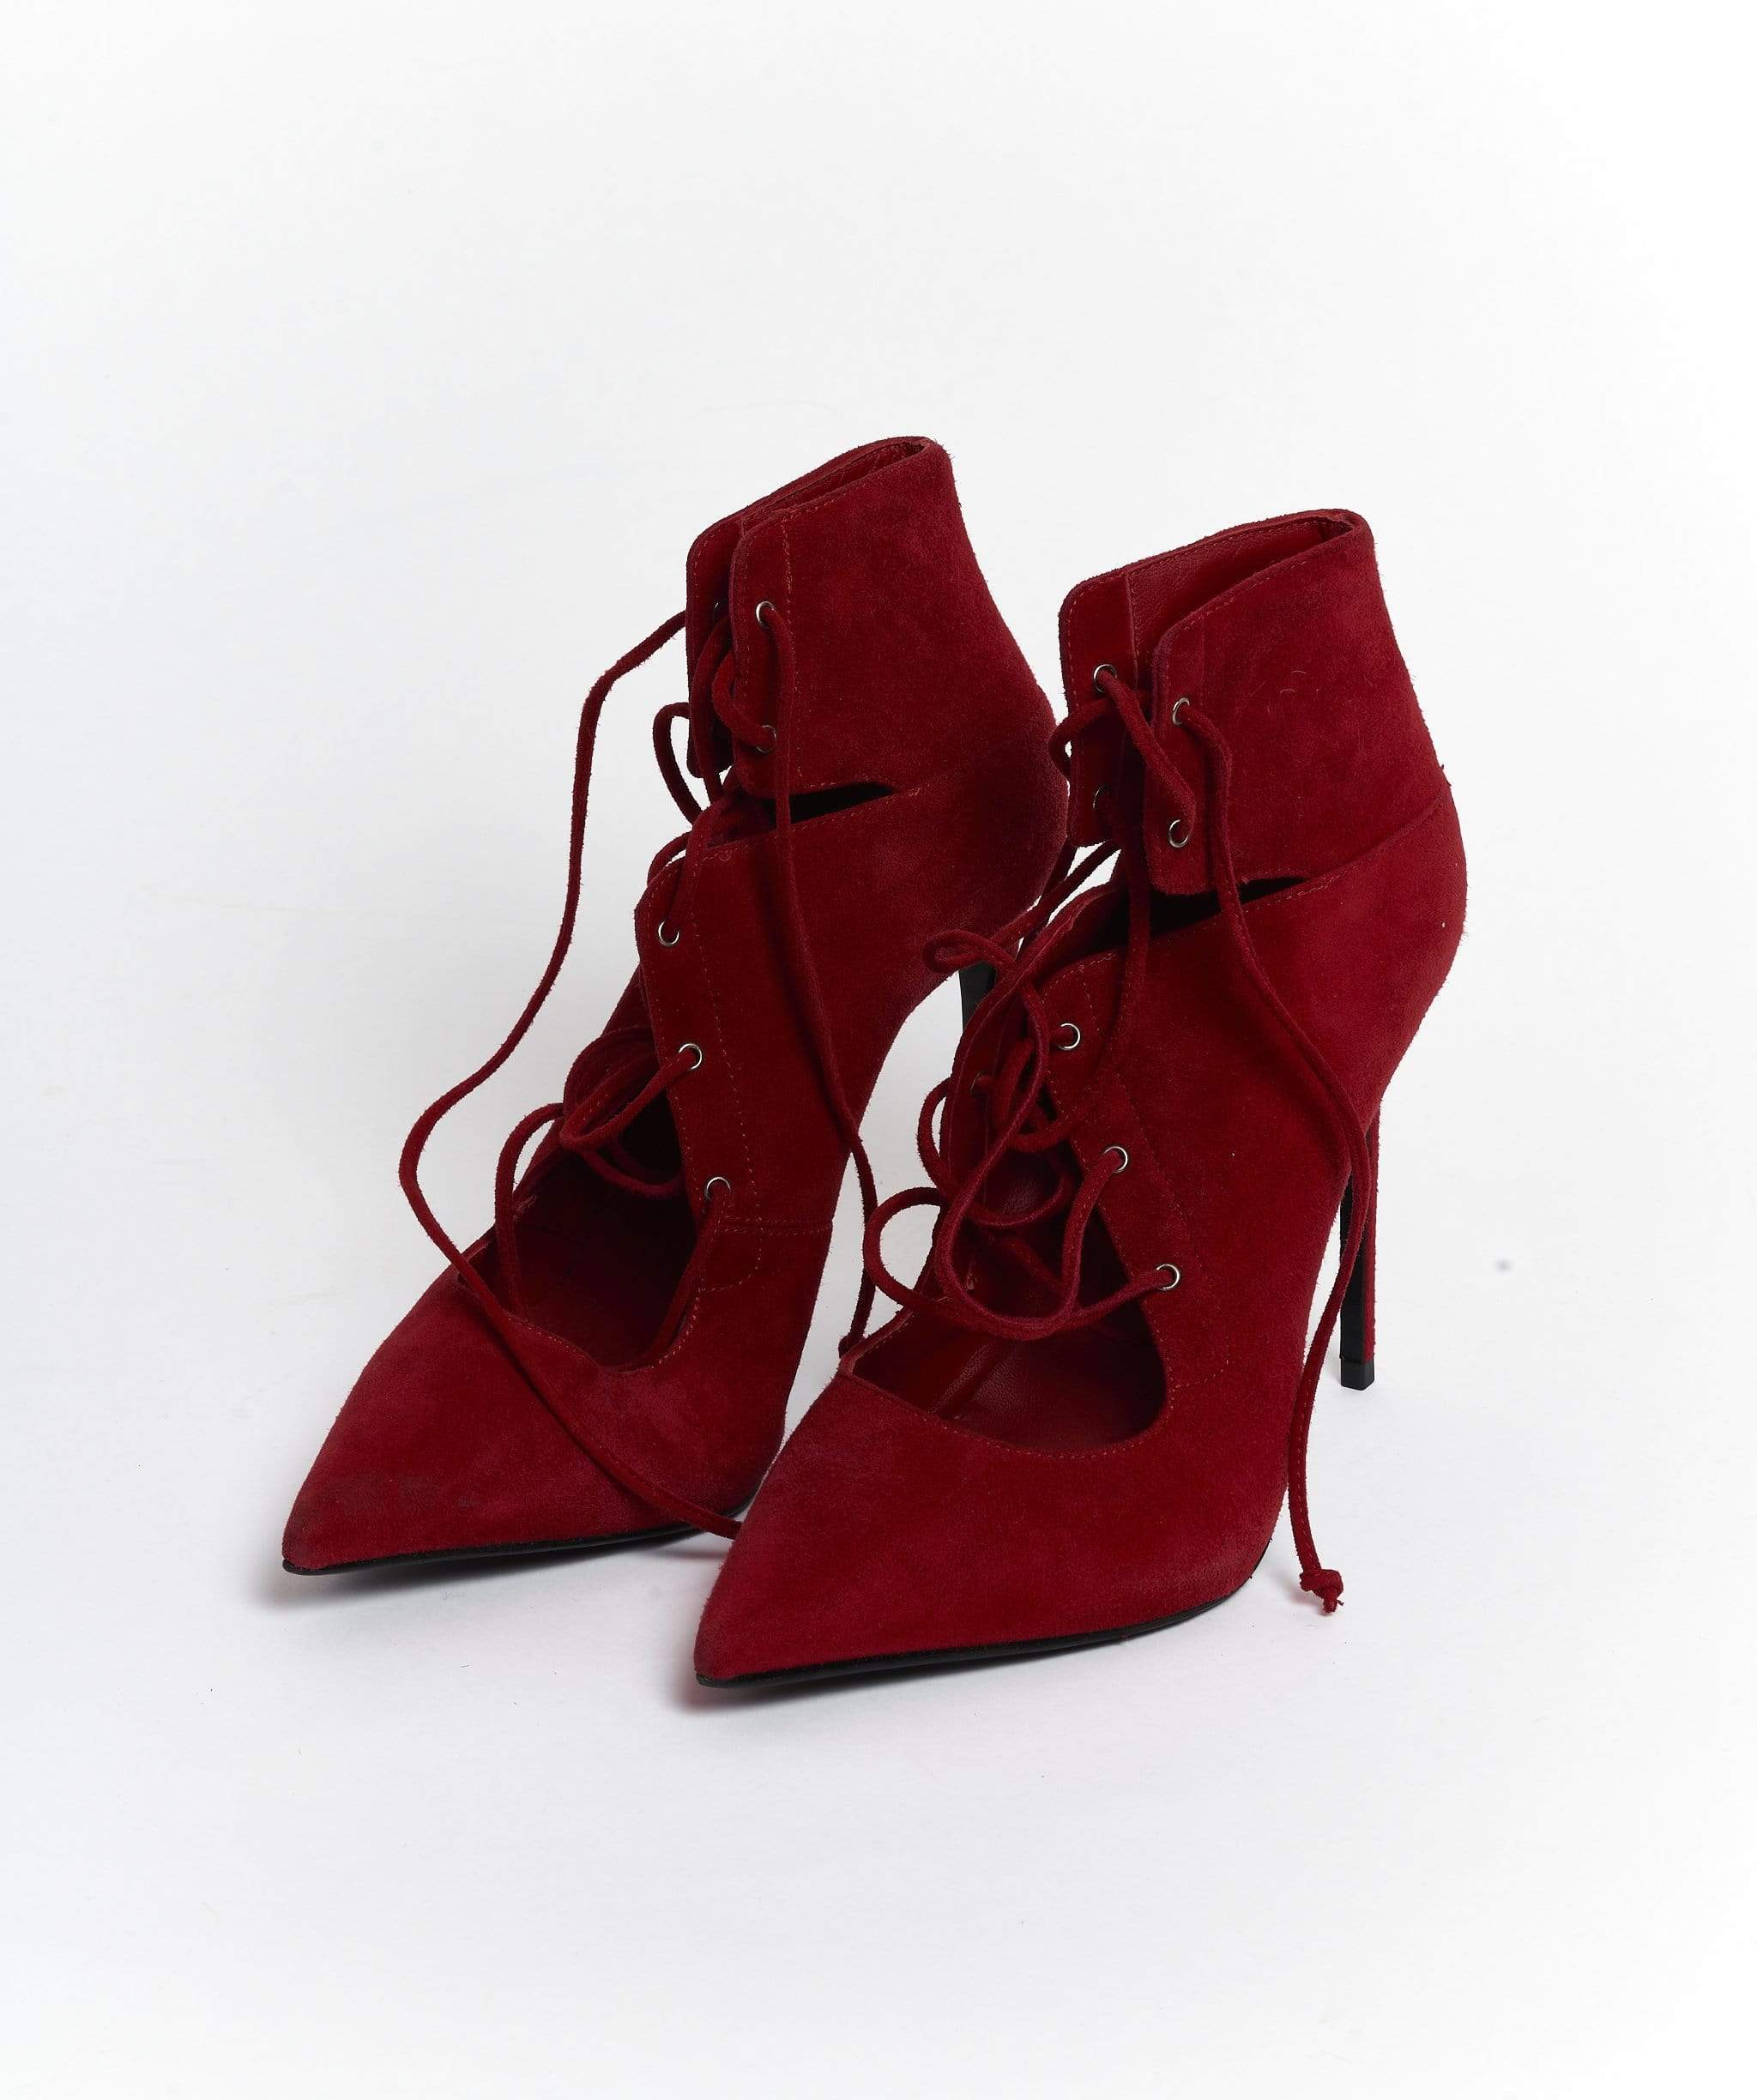 LE Silla LE Silla red seude heels lace ups size 36